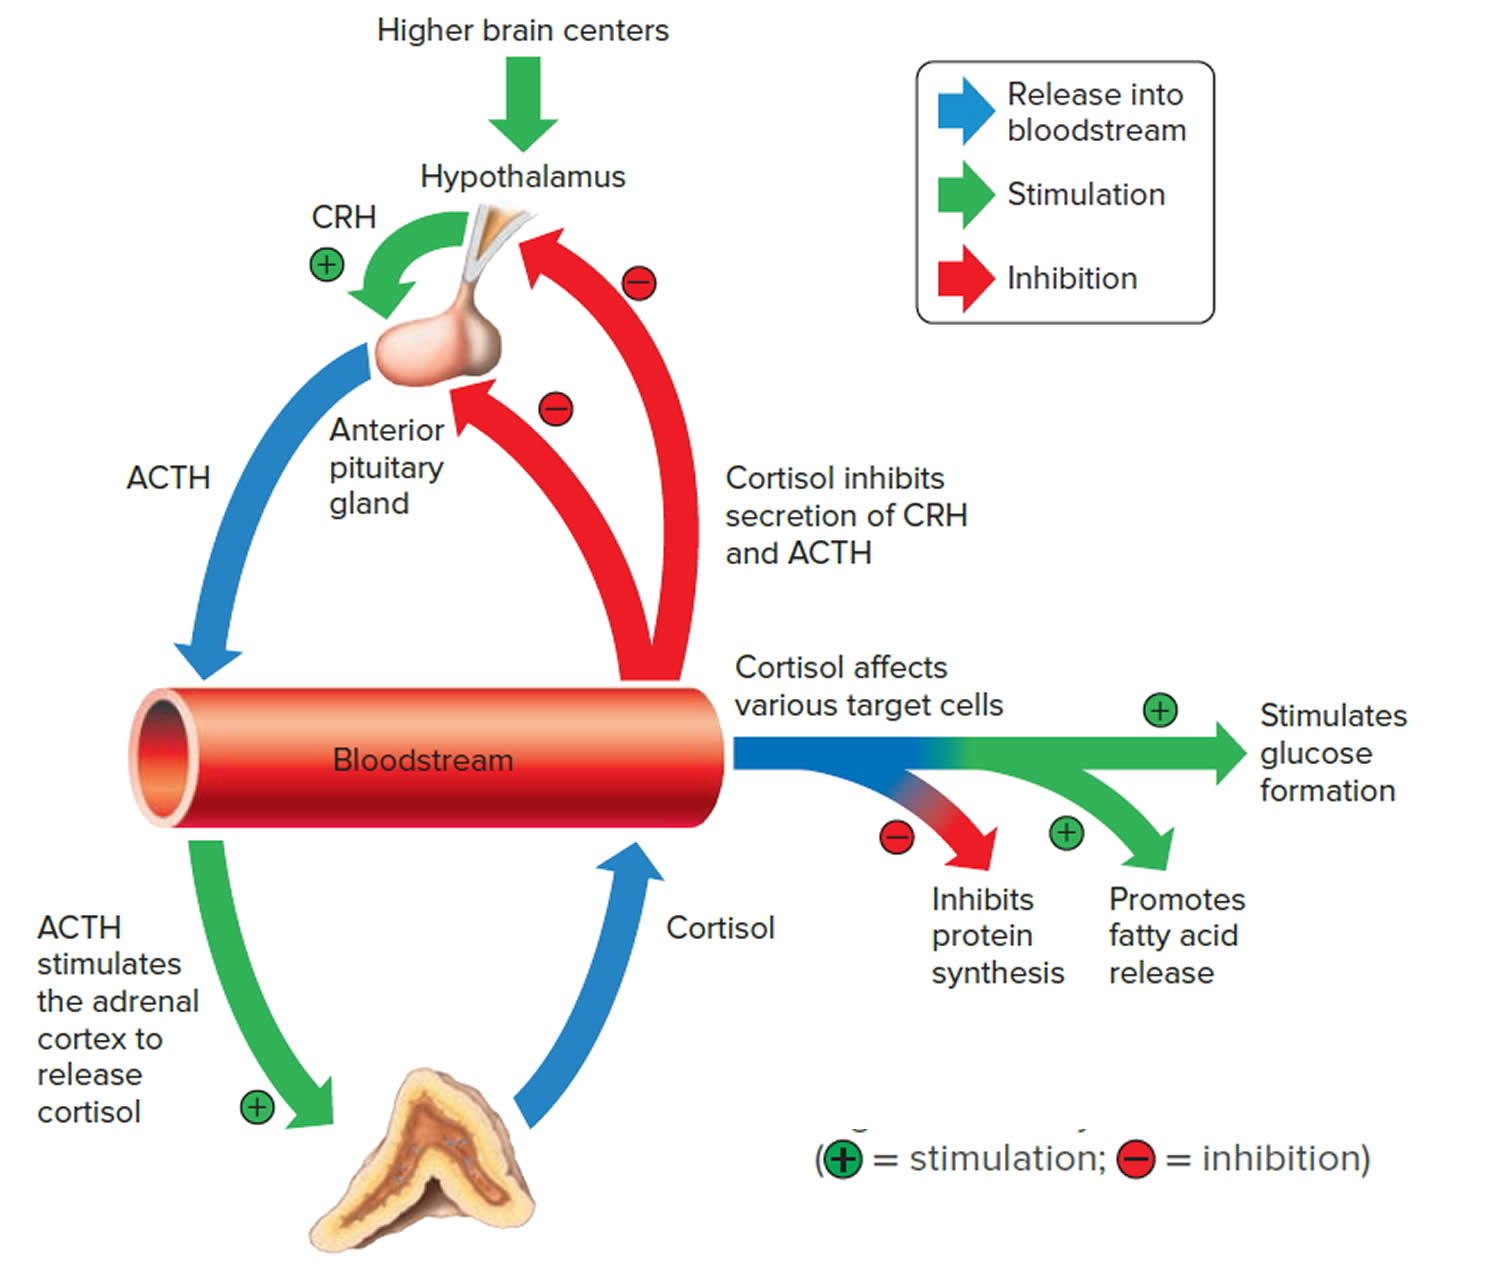 regulation of cortisol secretion